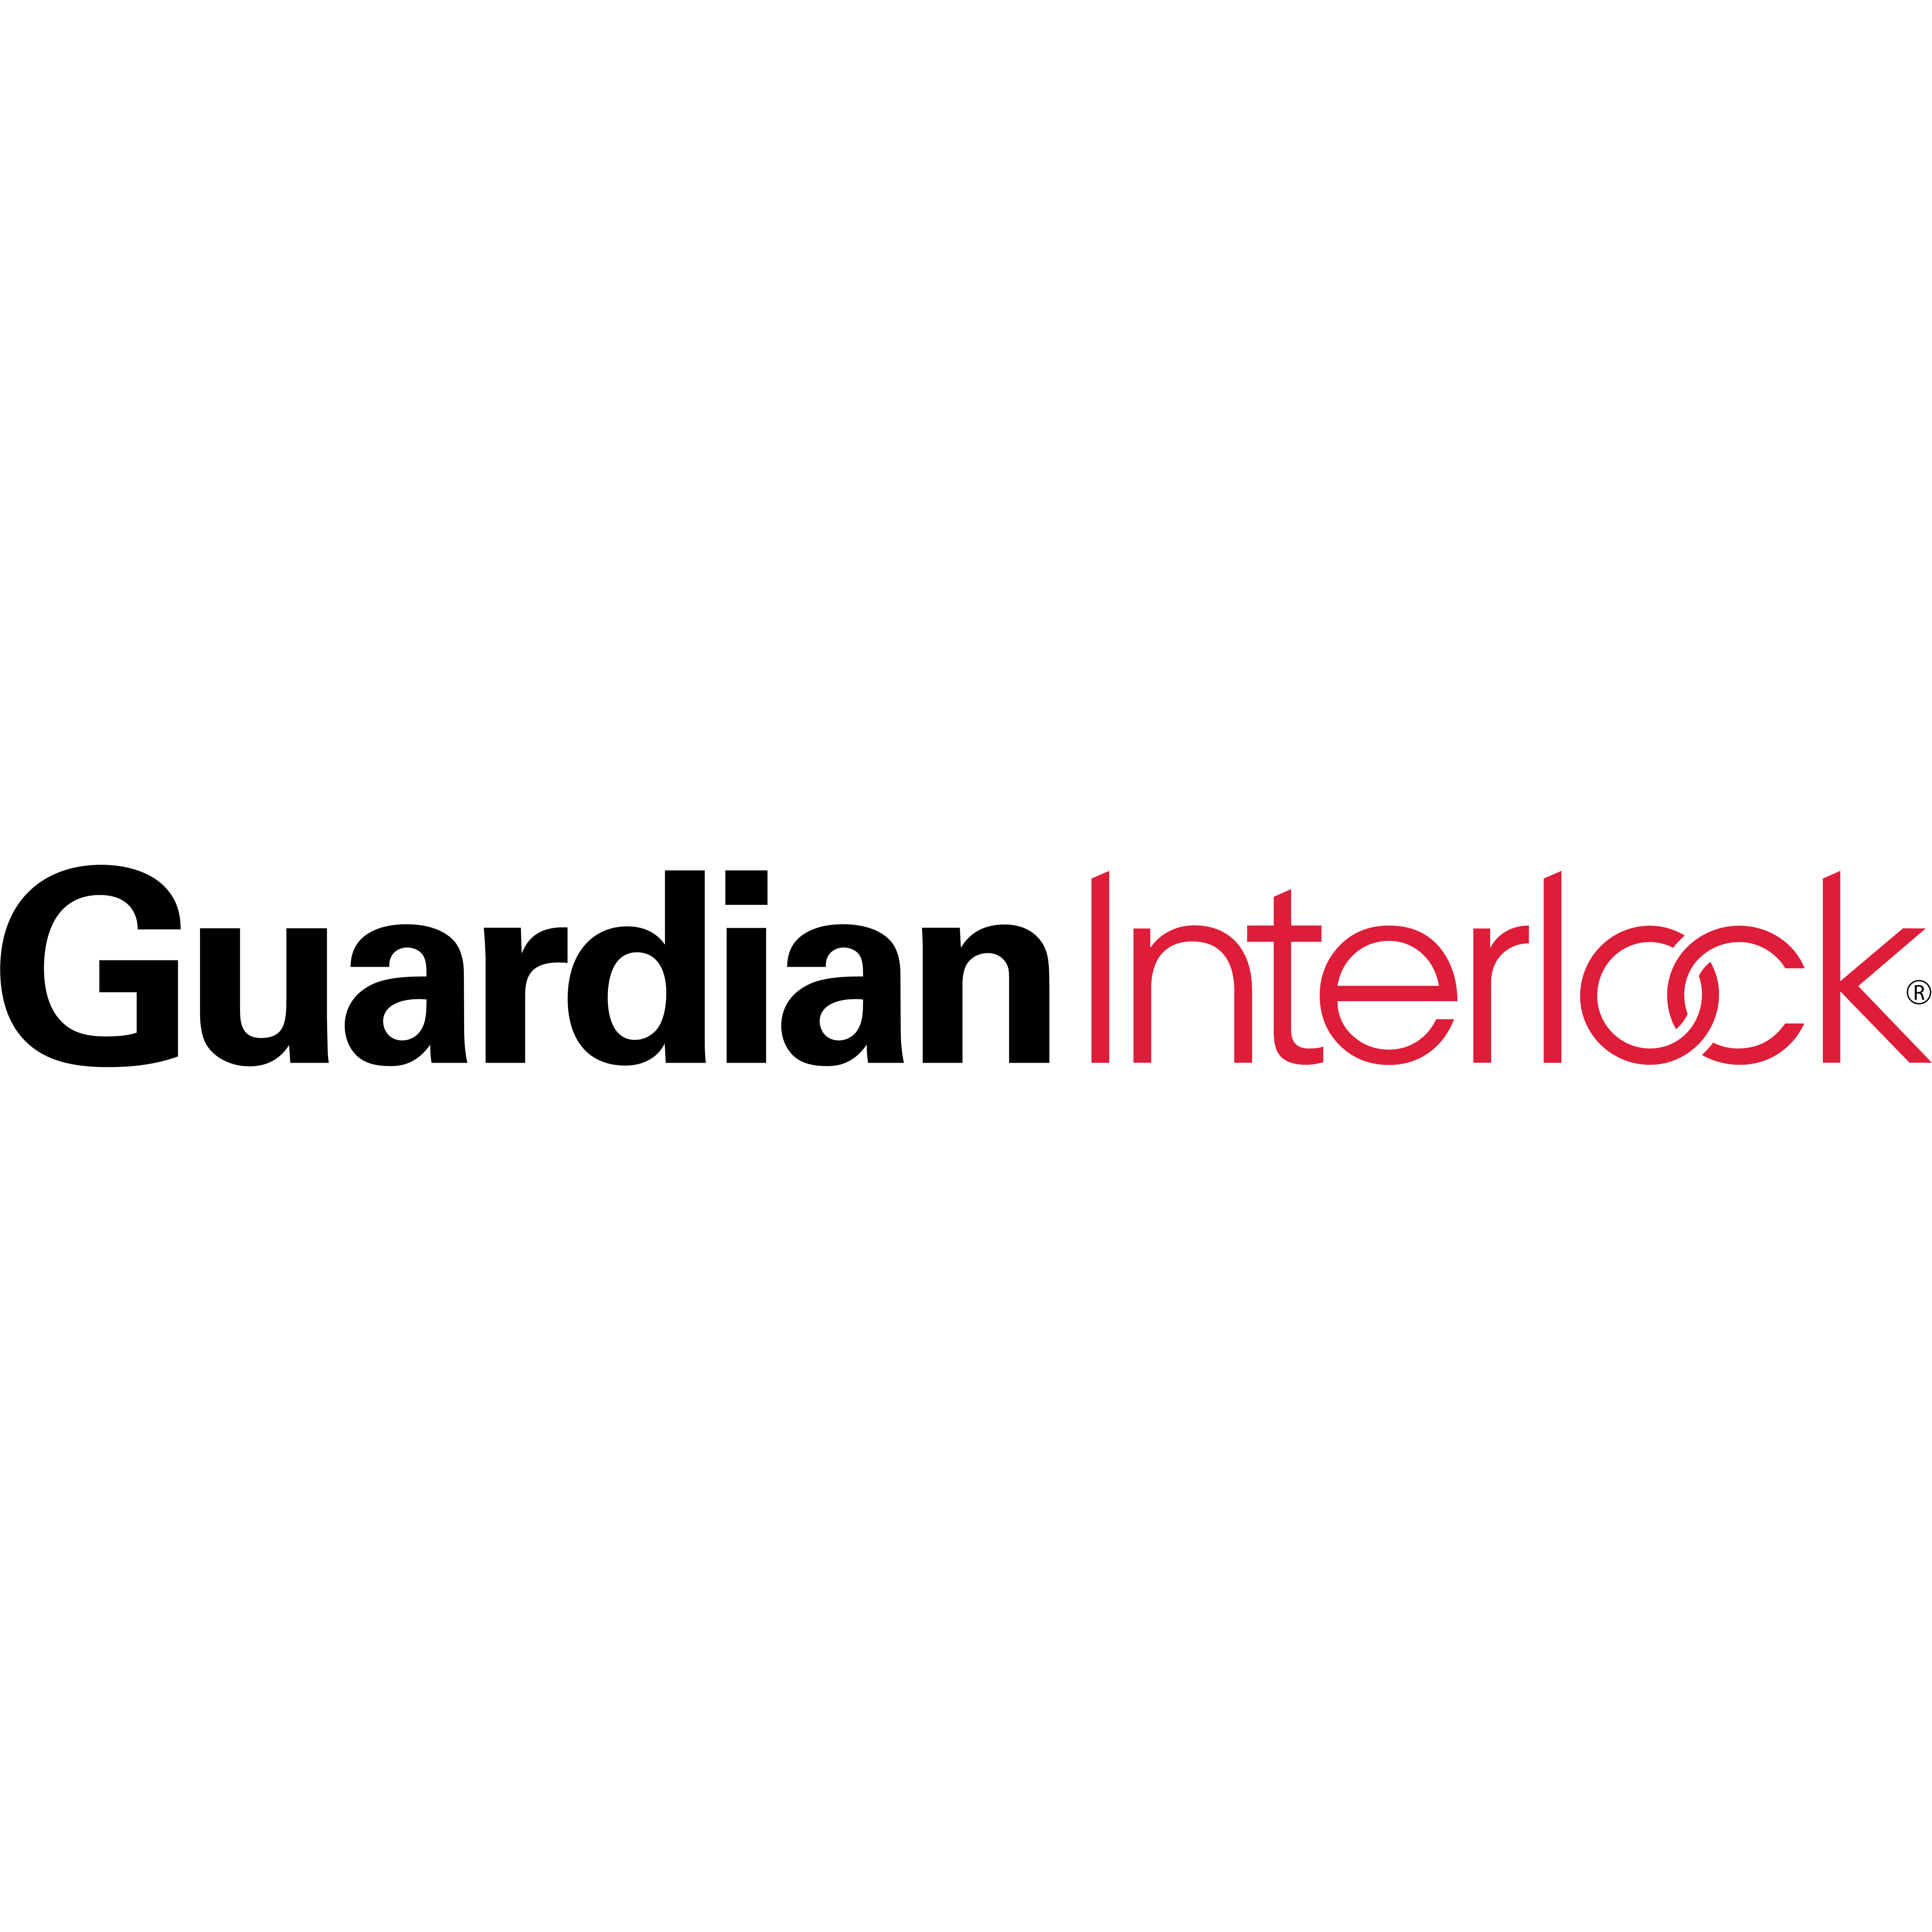 Guardian Interlock - Scottsbluff, NE 69361 - (308)225-5707 | ShowMeLocal.com